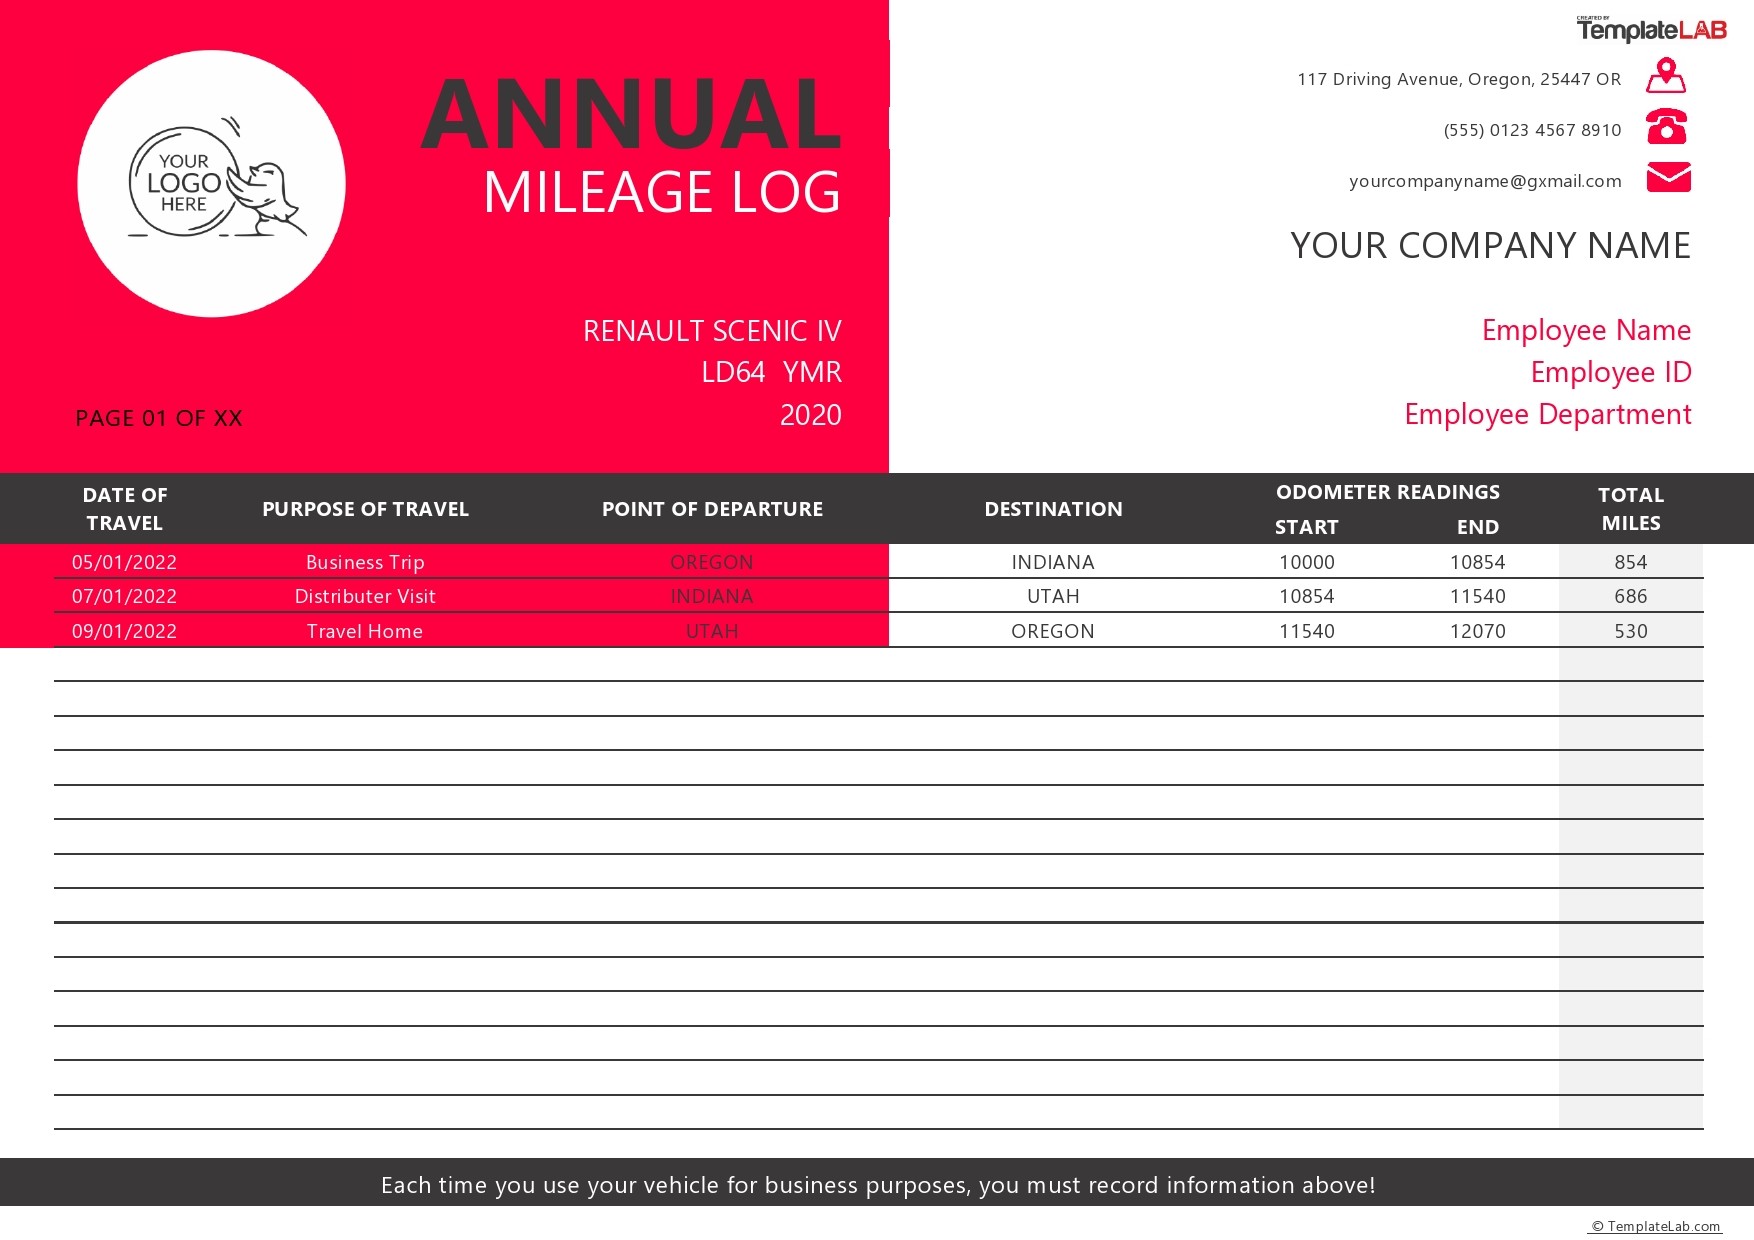 Free Annual Mileage Log